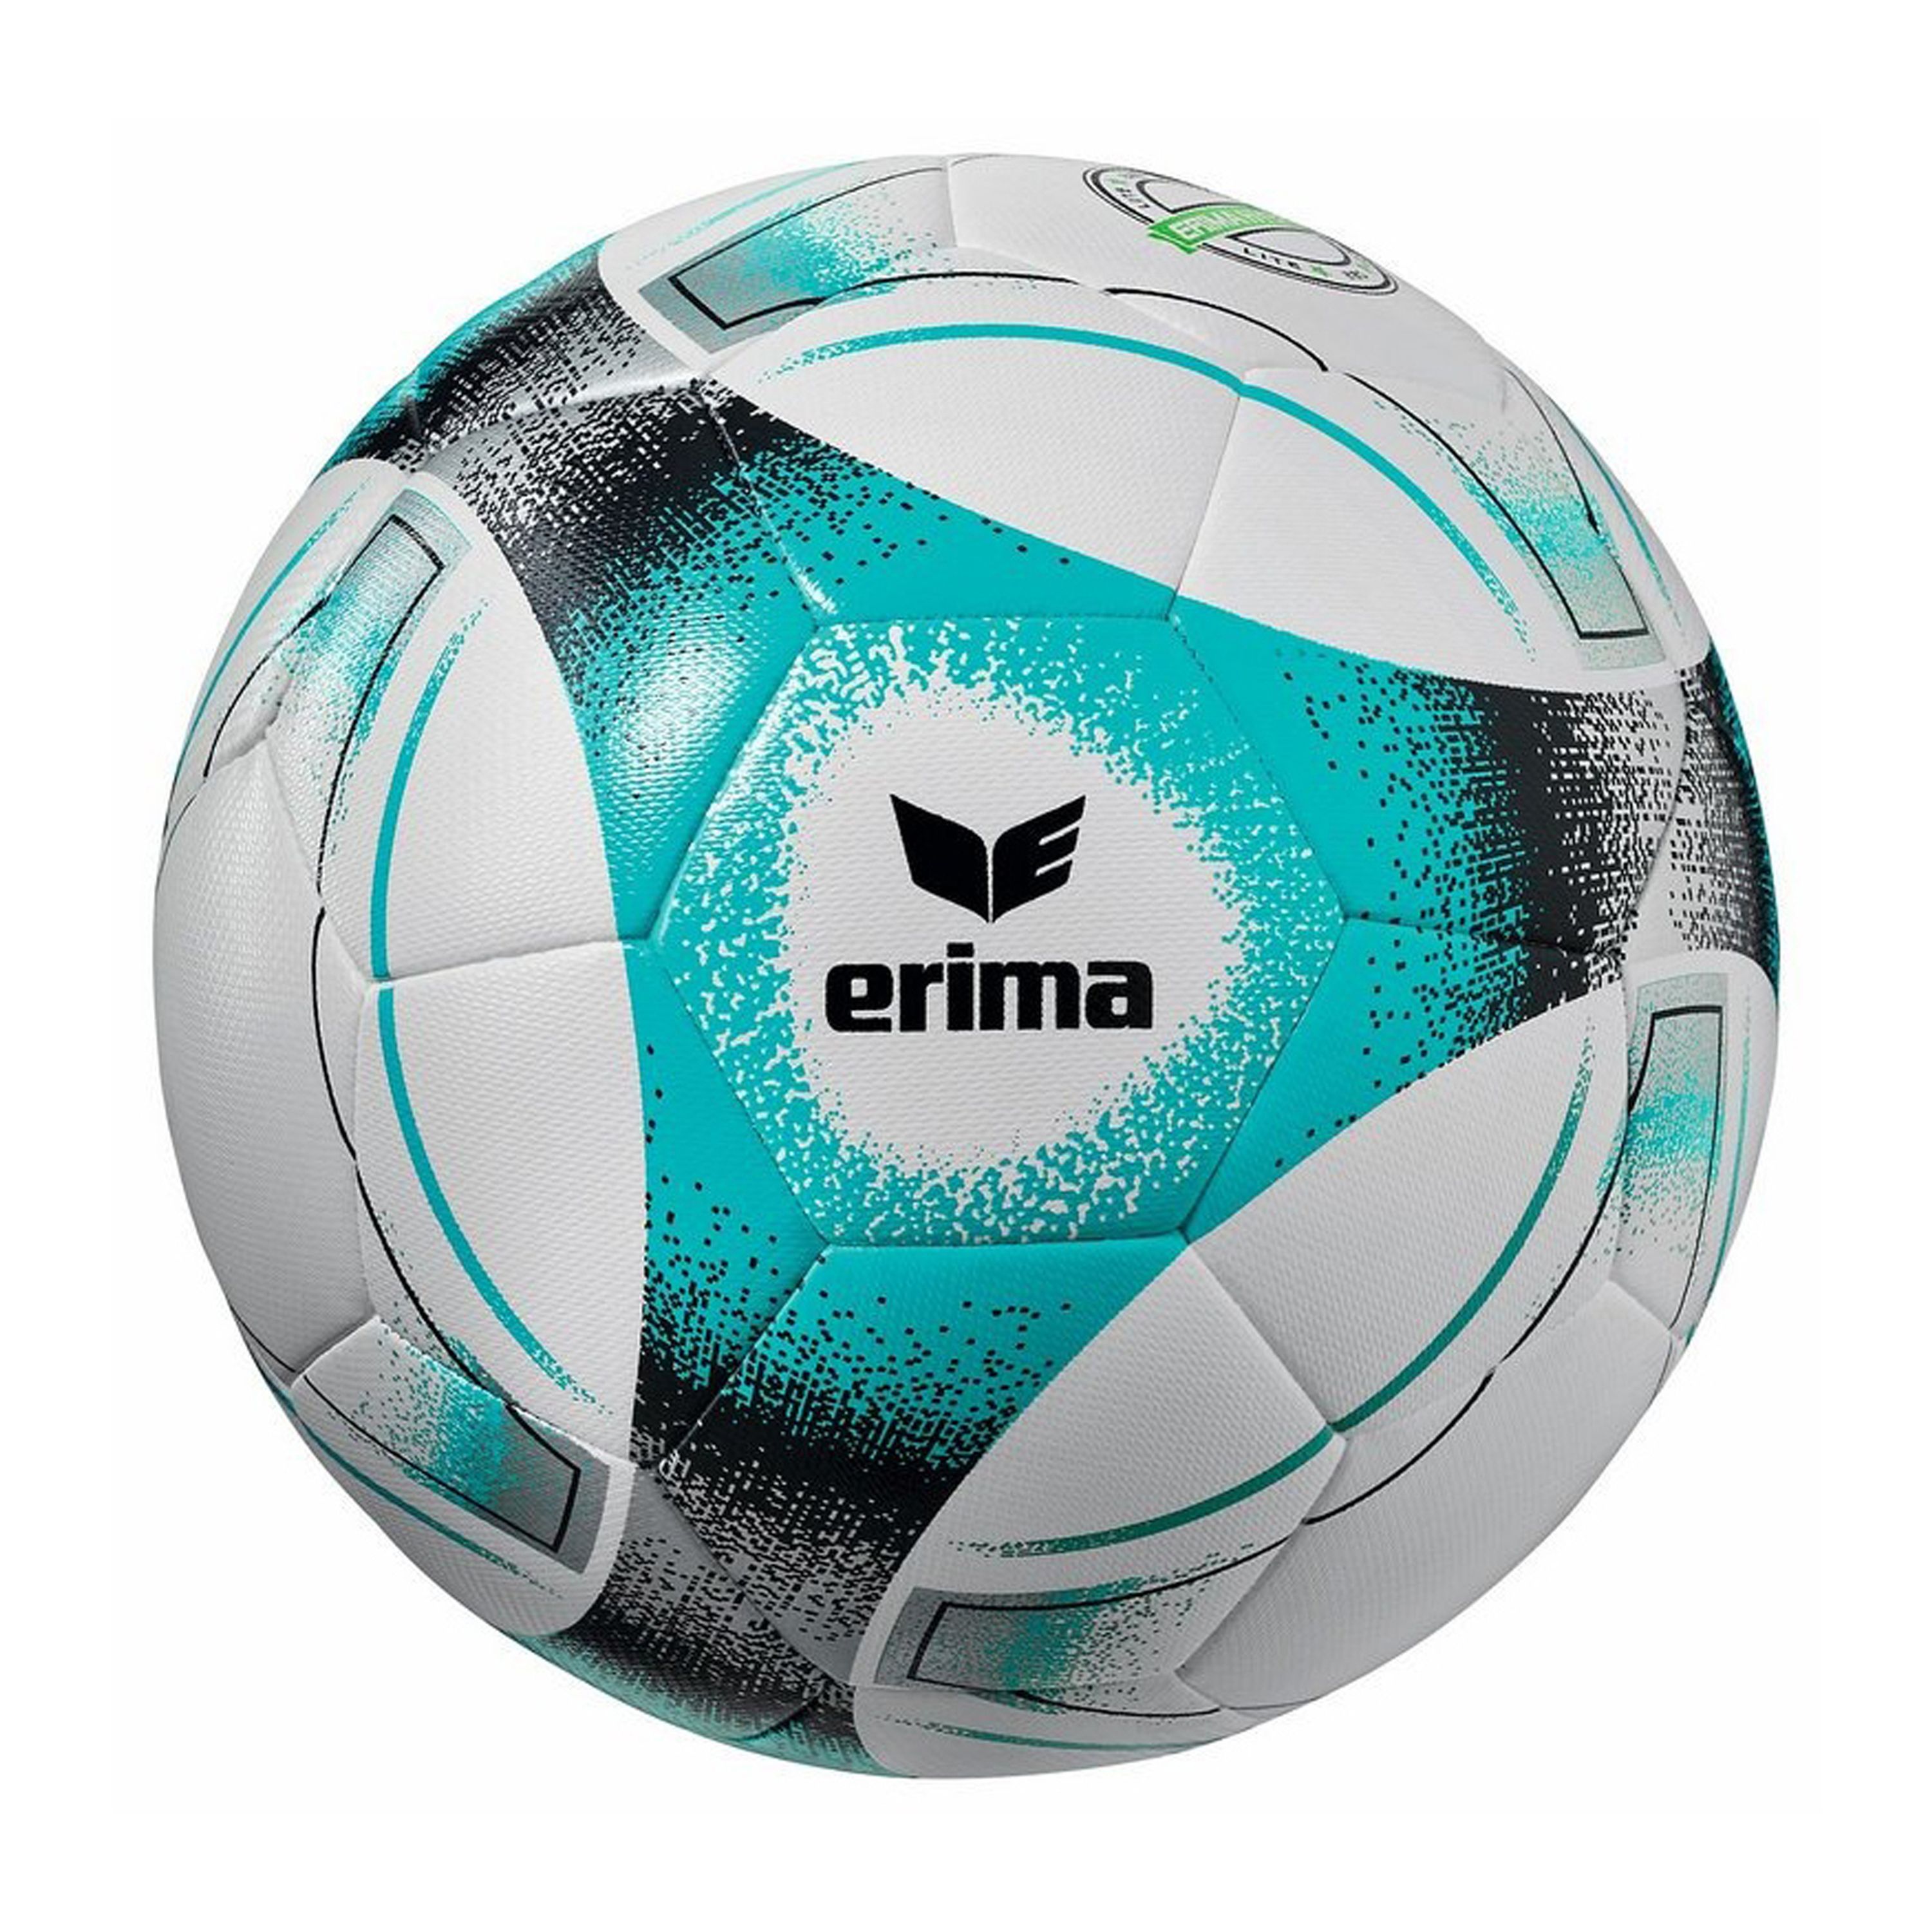 Erima Hybrid Lite 290 Voetbal